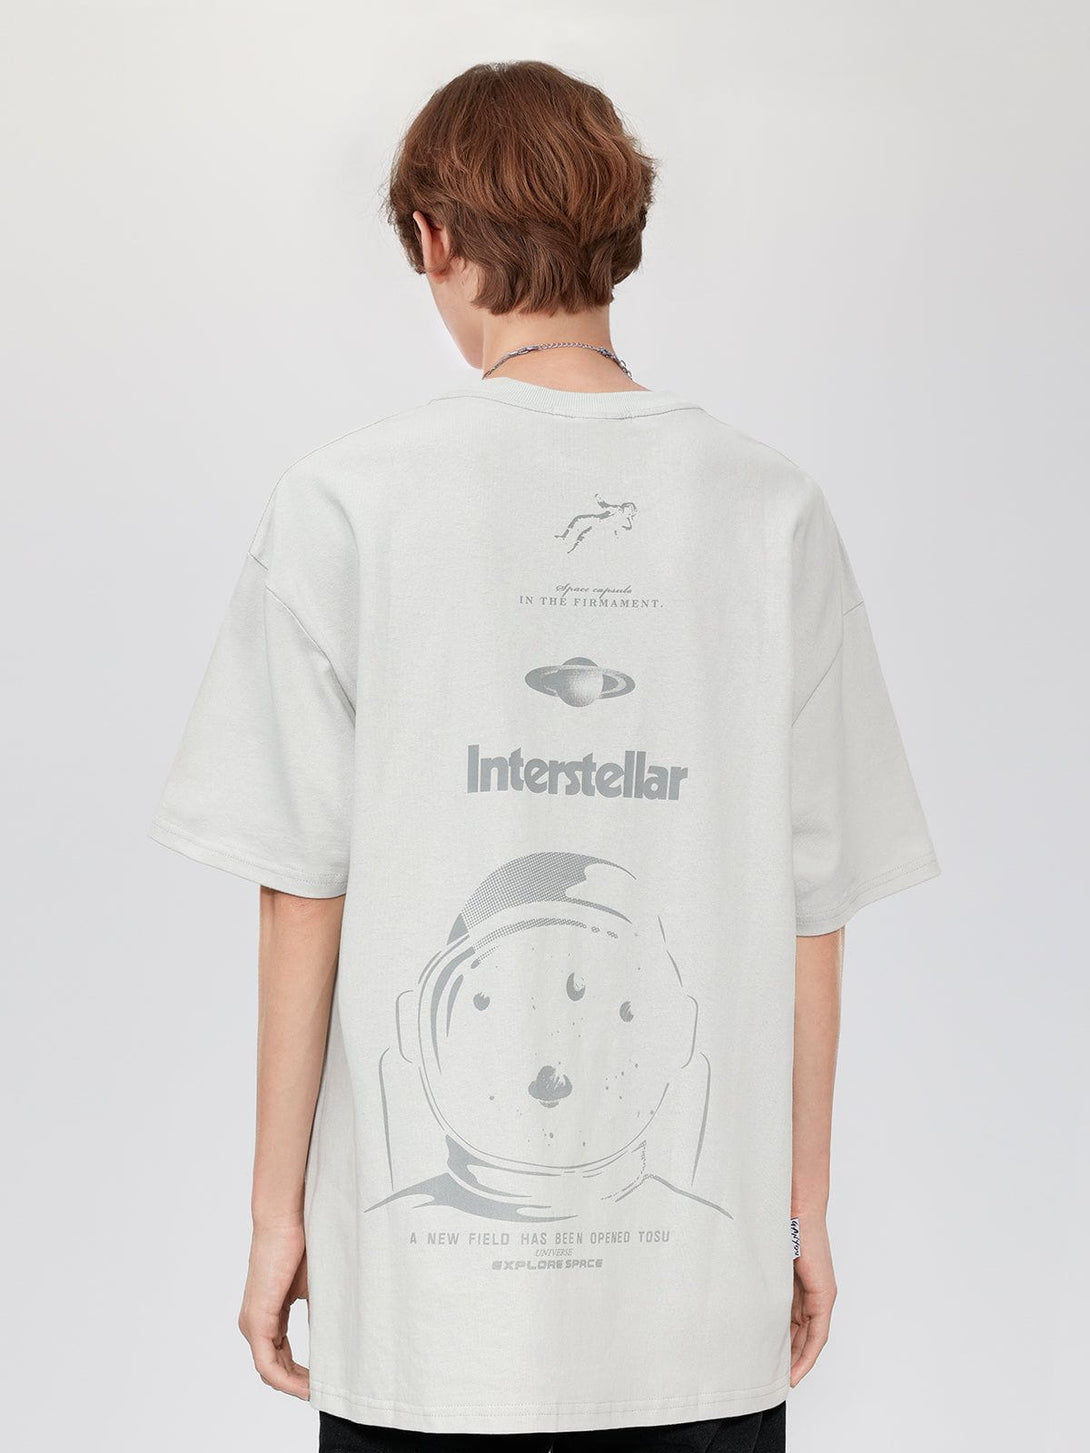 Majesda® - Pure Cotton Astronaut Space Print Graphic Tee- Outfit Ideas - Streetwear Fashion - majesda.com